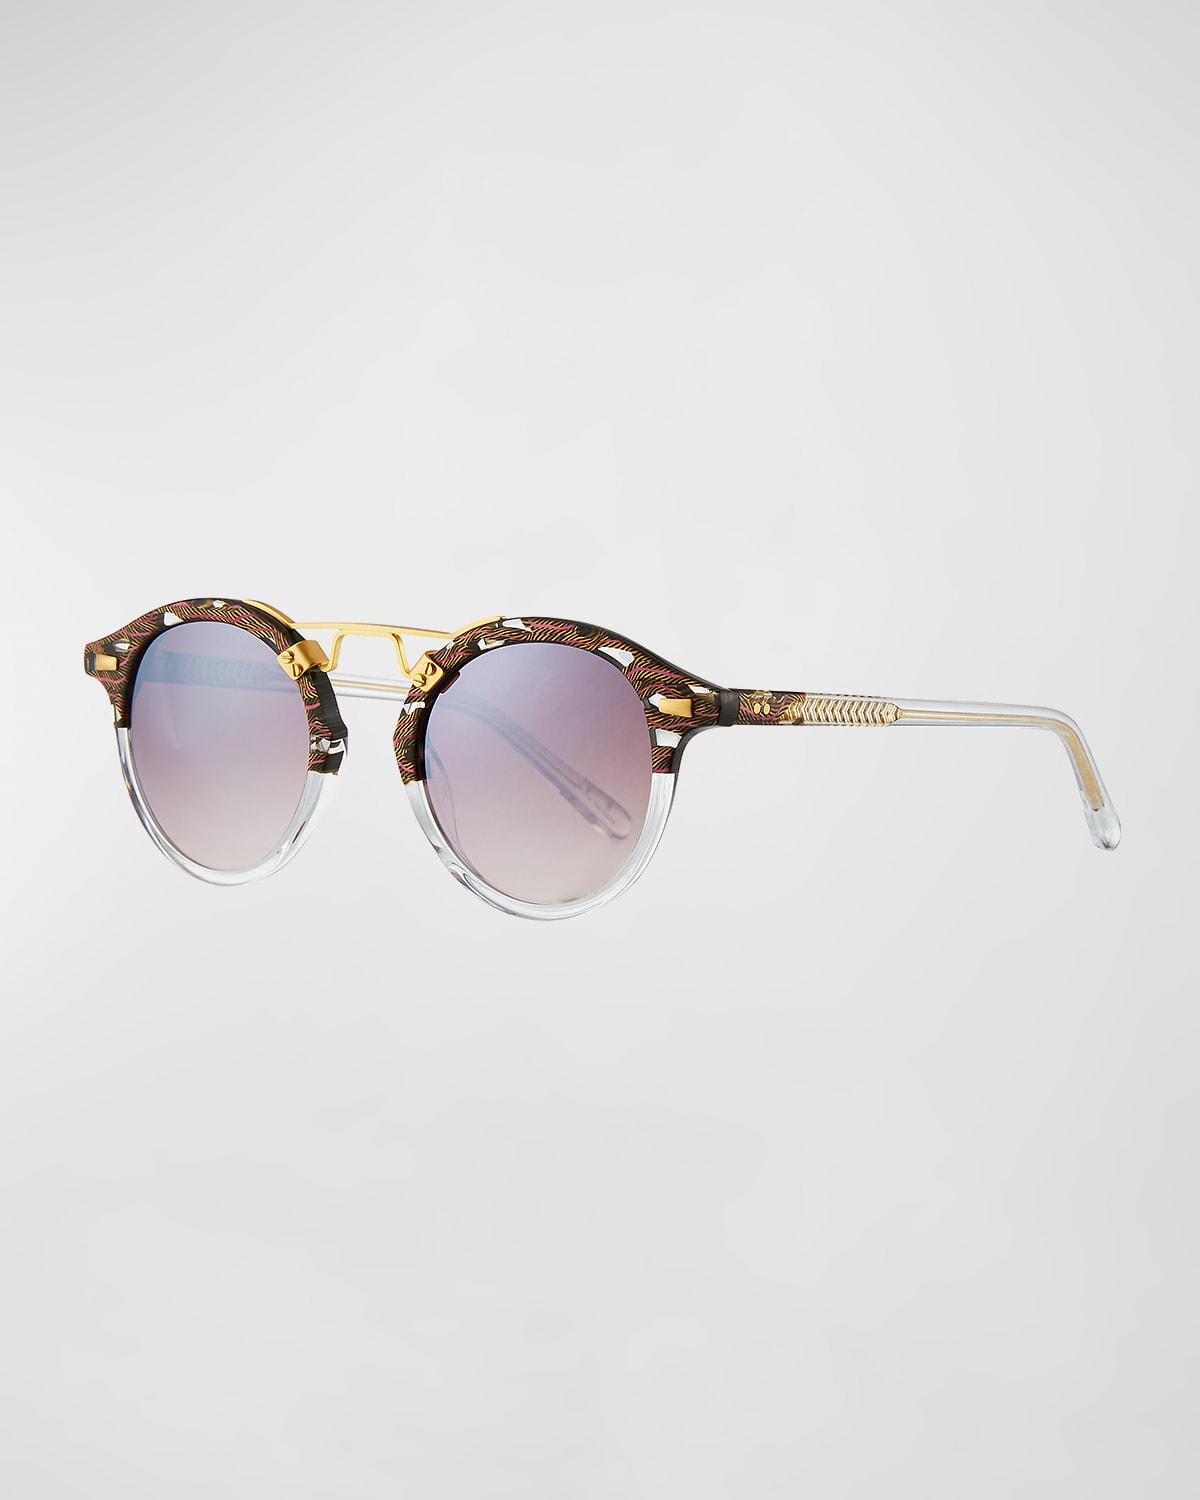 St. Louis Round Mirrored Sunglasses